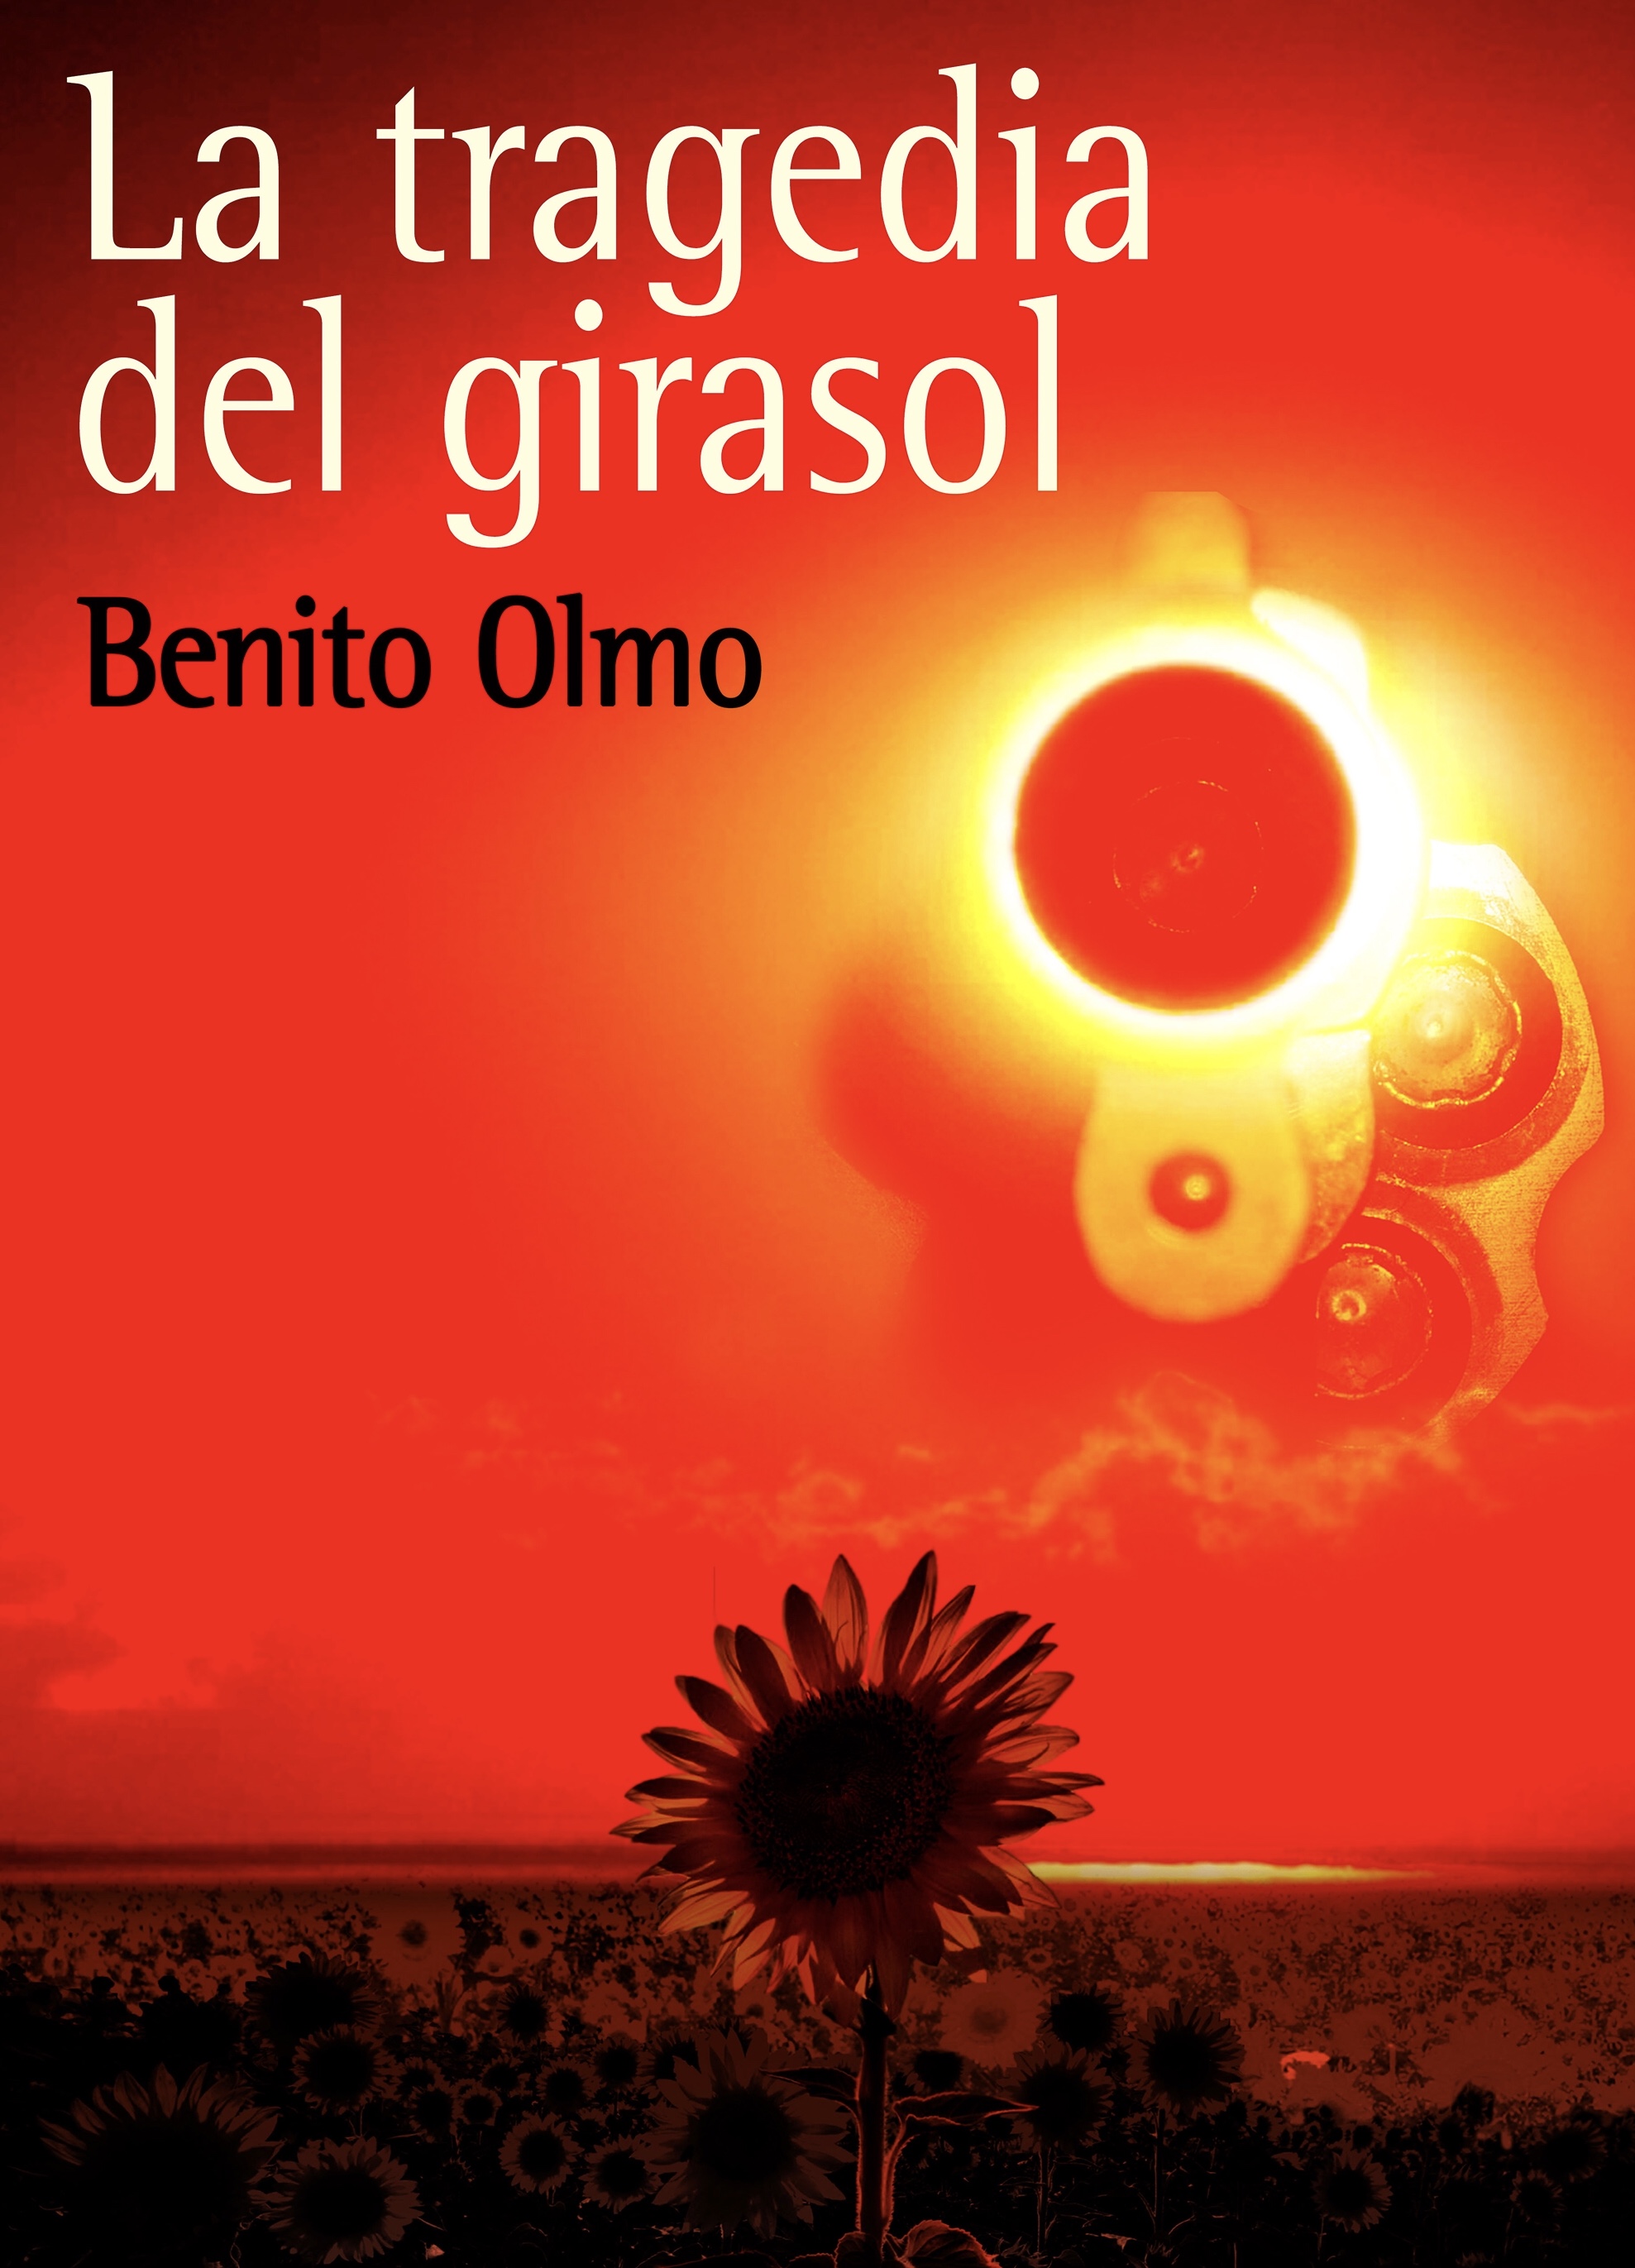 La Tragedia del Girasol, de Benito Olmo.